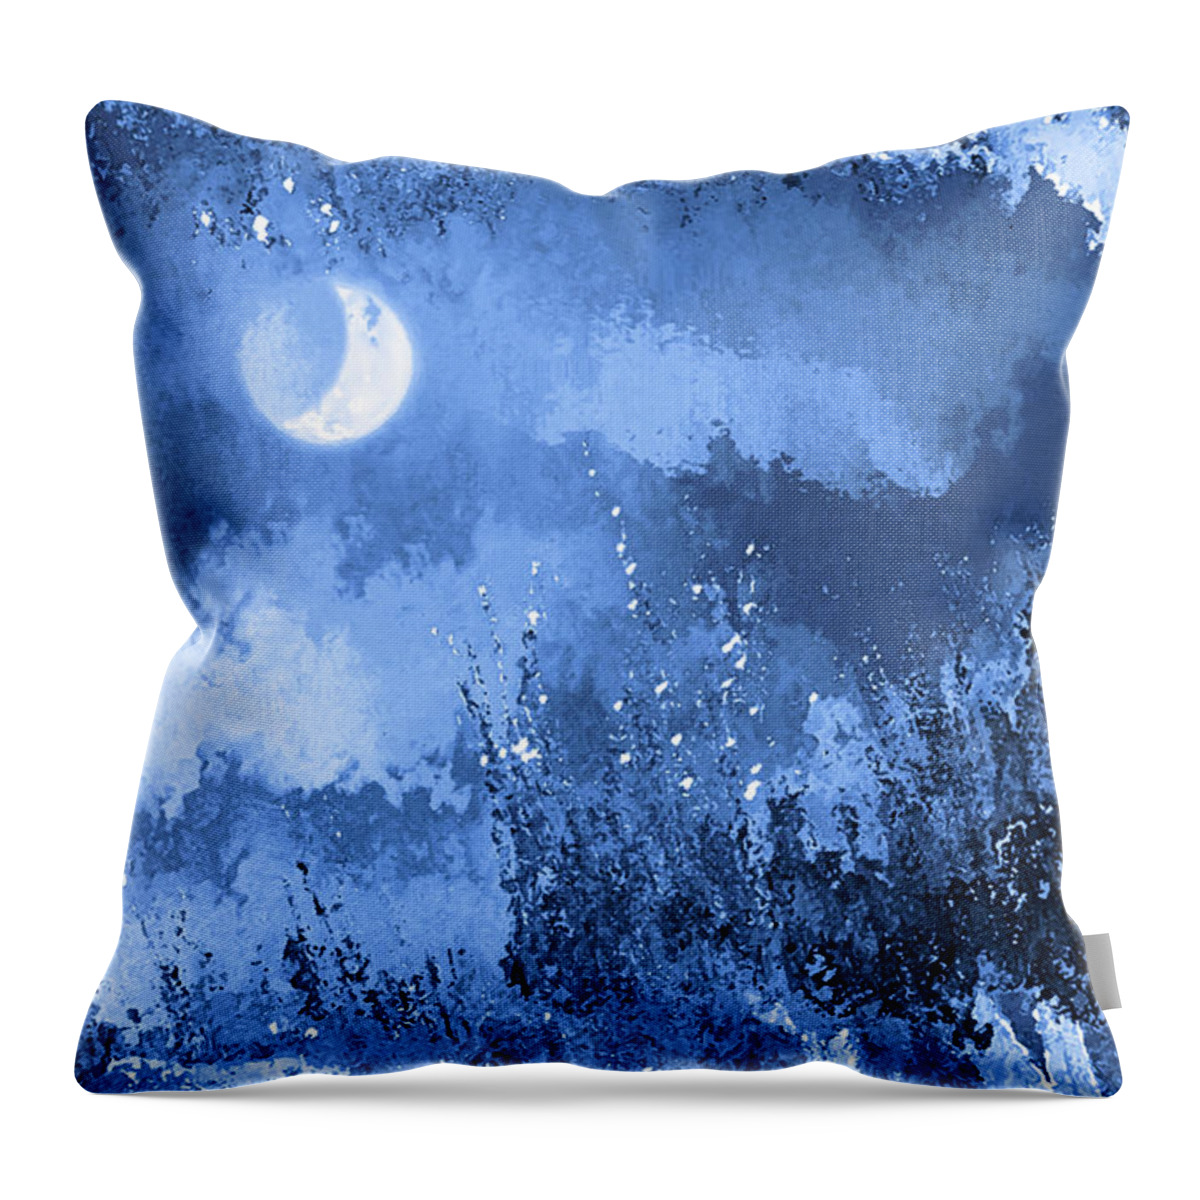 Evocative Throw Pillow featuring the digital art The Crescent Moon by Gabriele Pomykaj